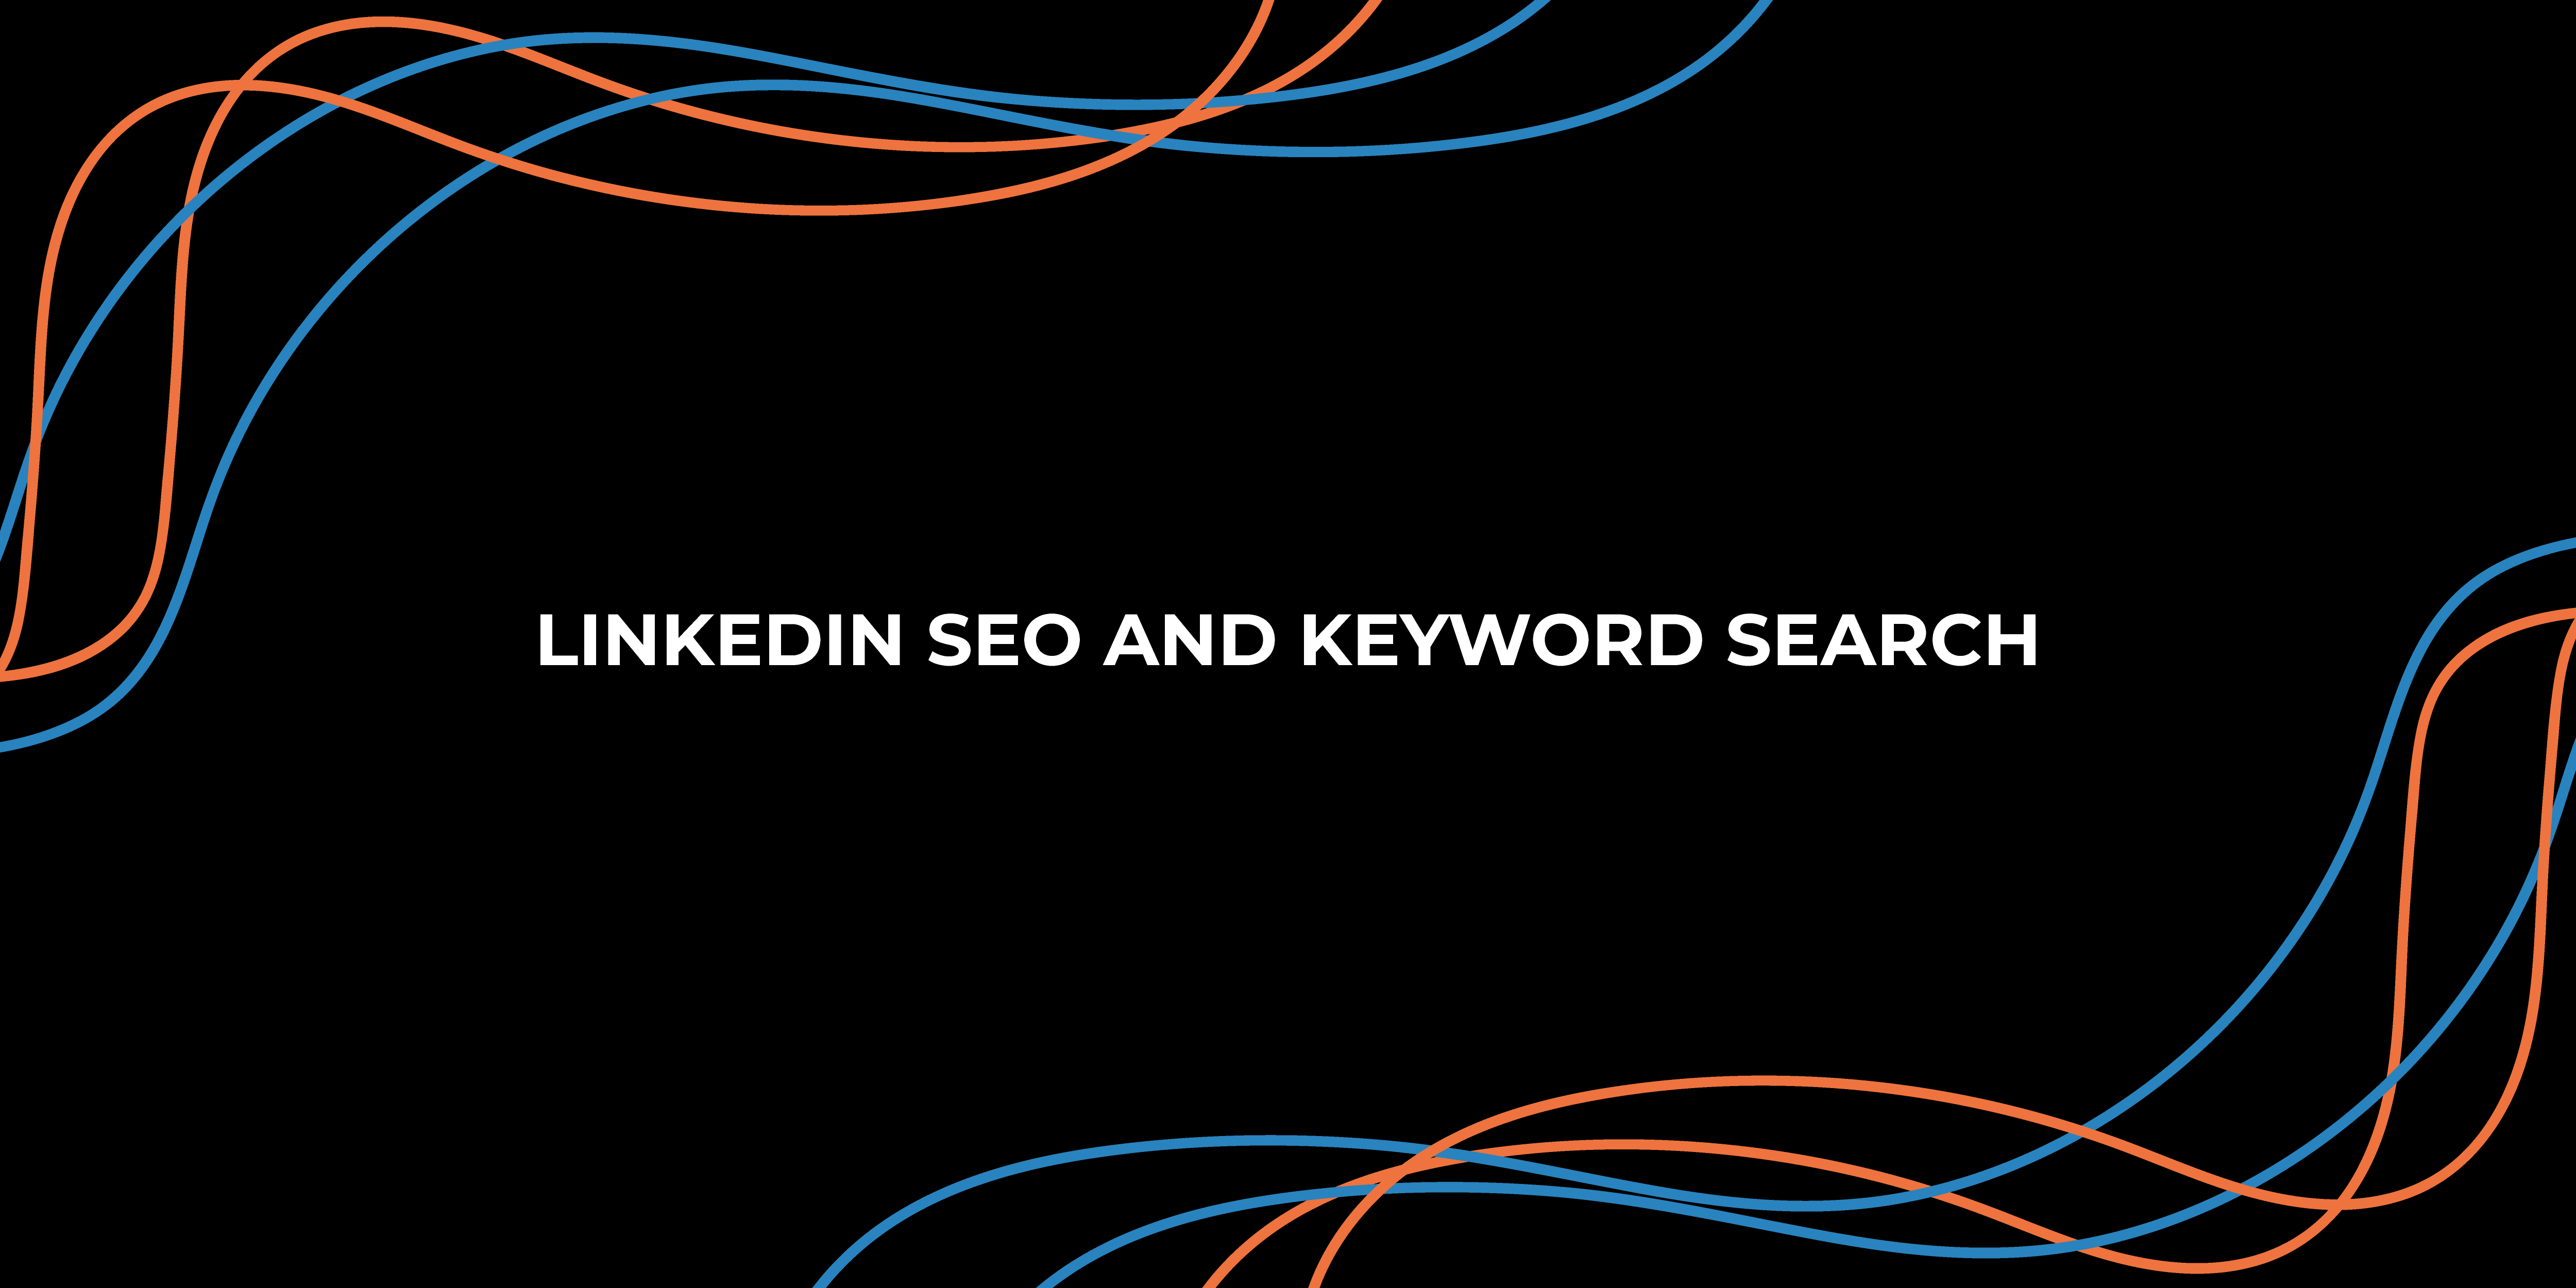 LinkedIn-SEO-And-Keyword-Search | StraightIn